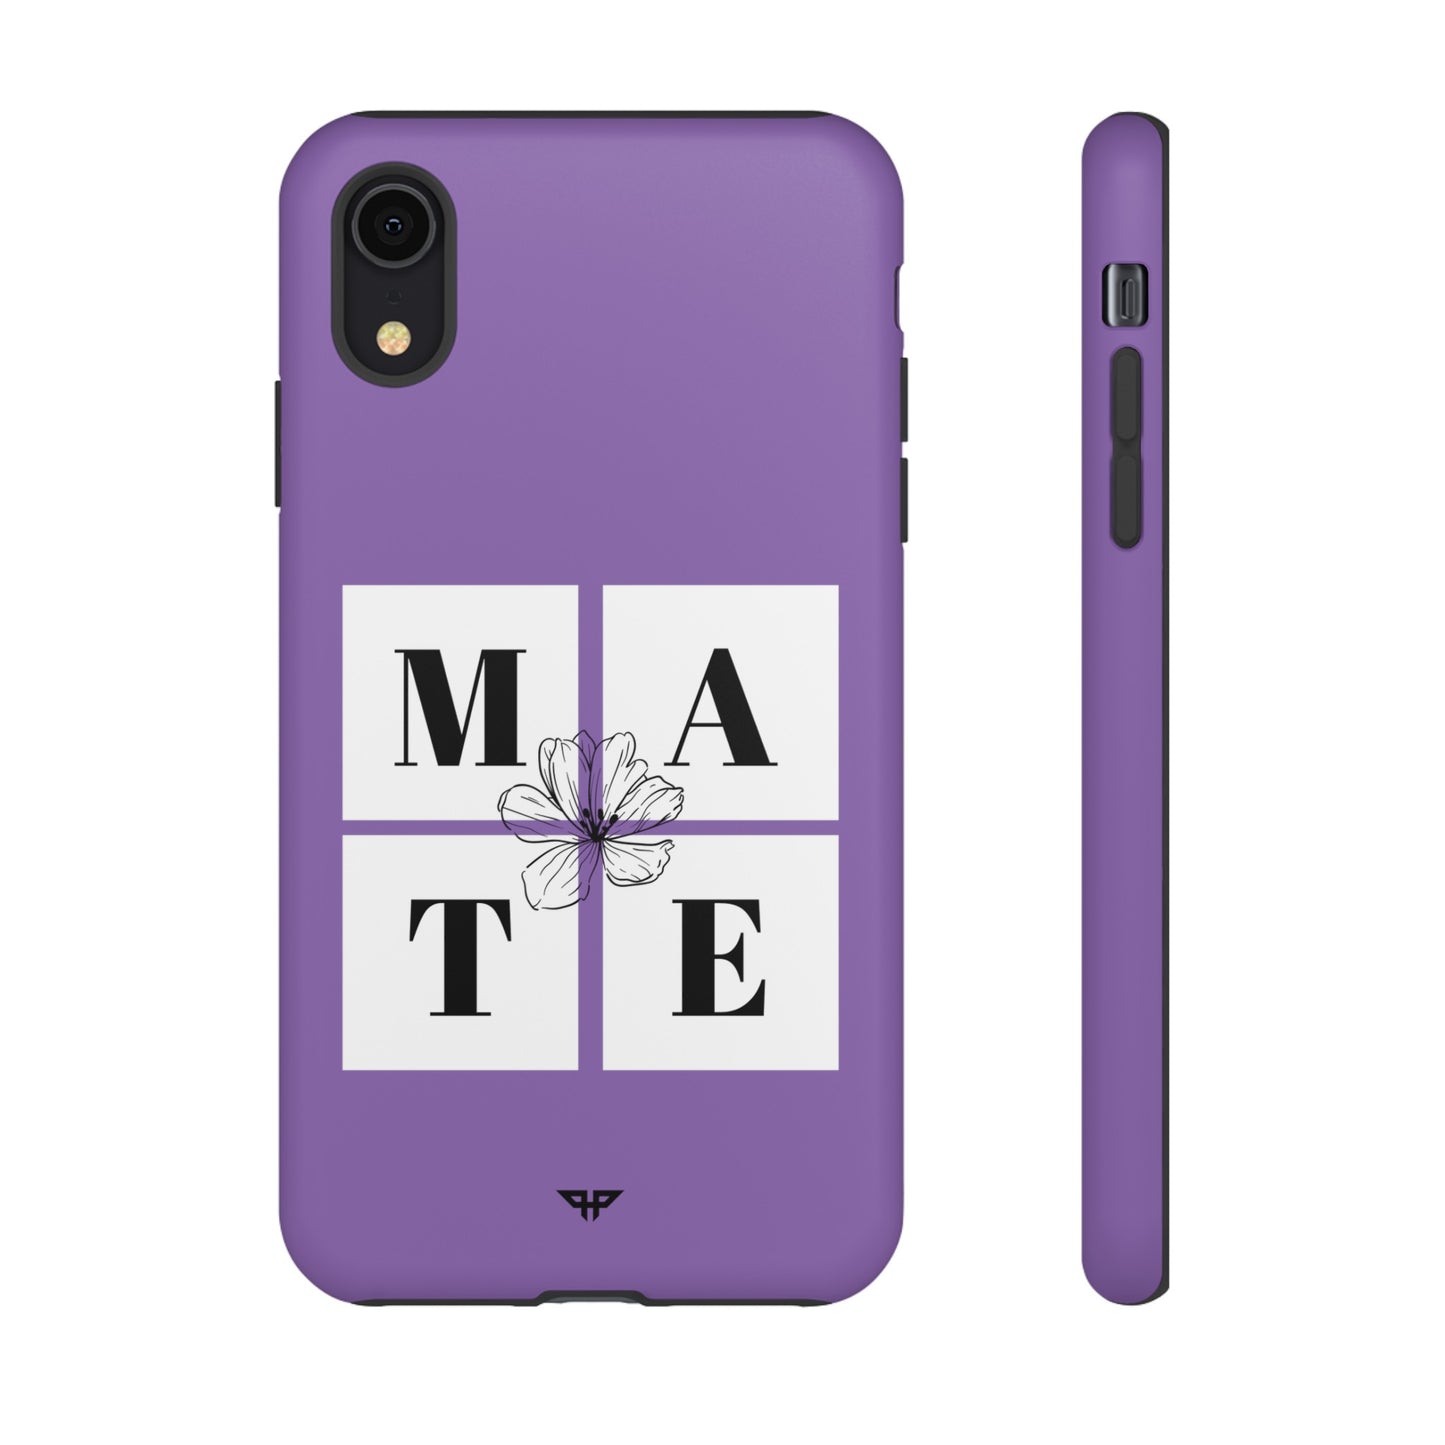 Soul mate (purple) p2